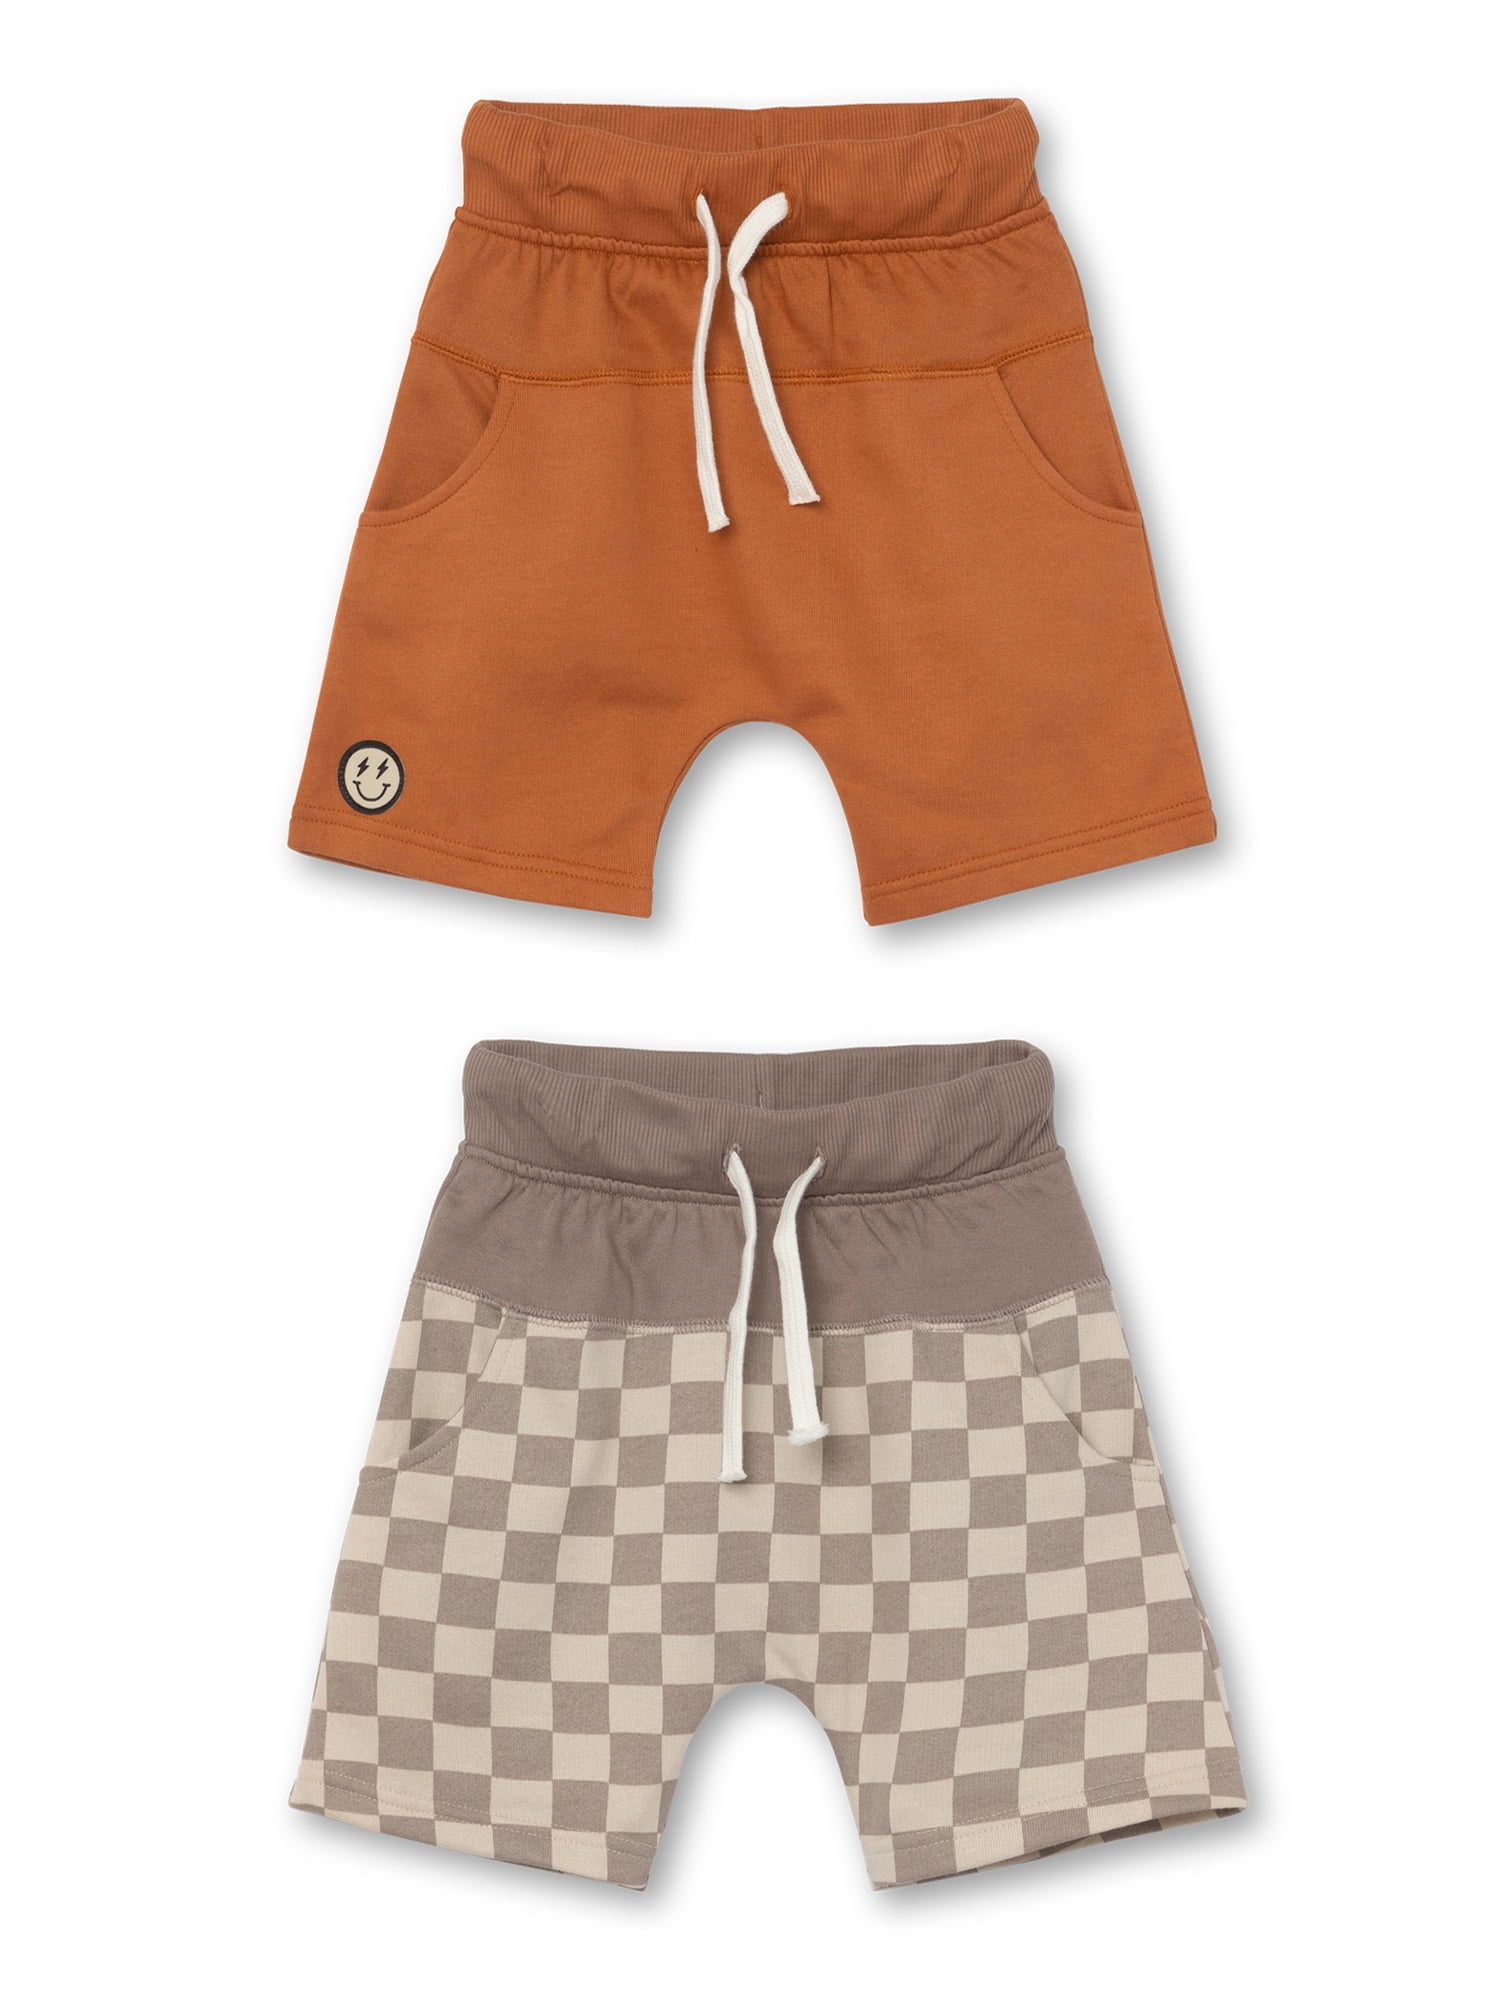 Little Star Organic Toddler Boy 2Pk Harem Shorts, Size 12M-5T